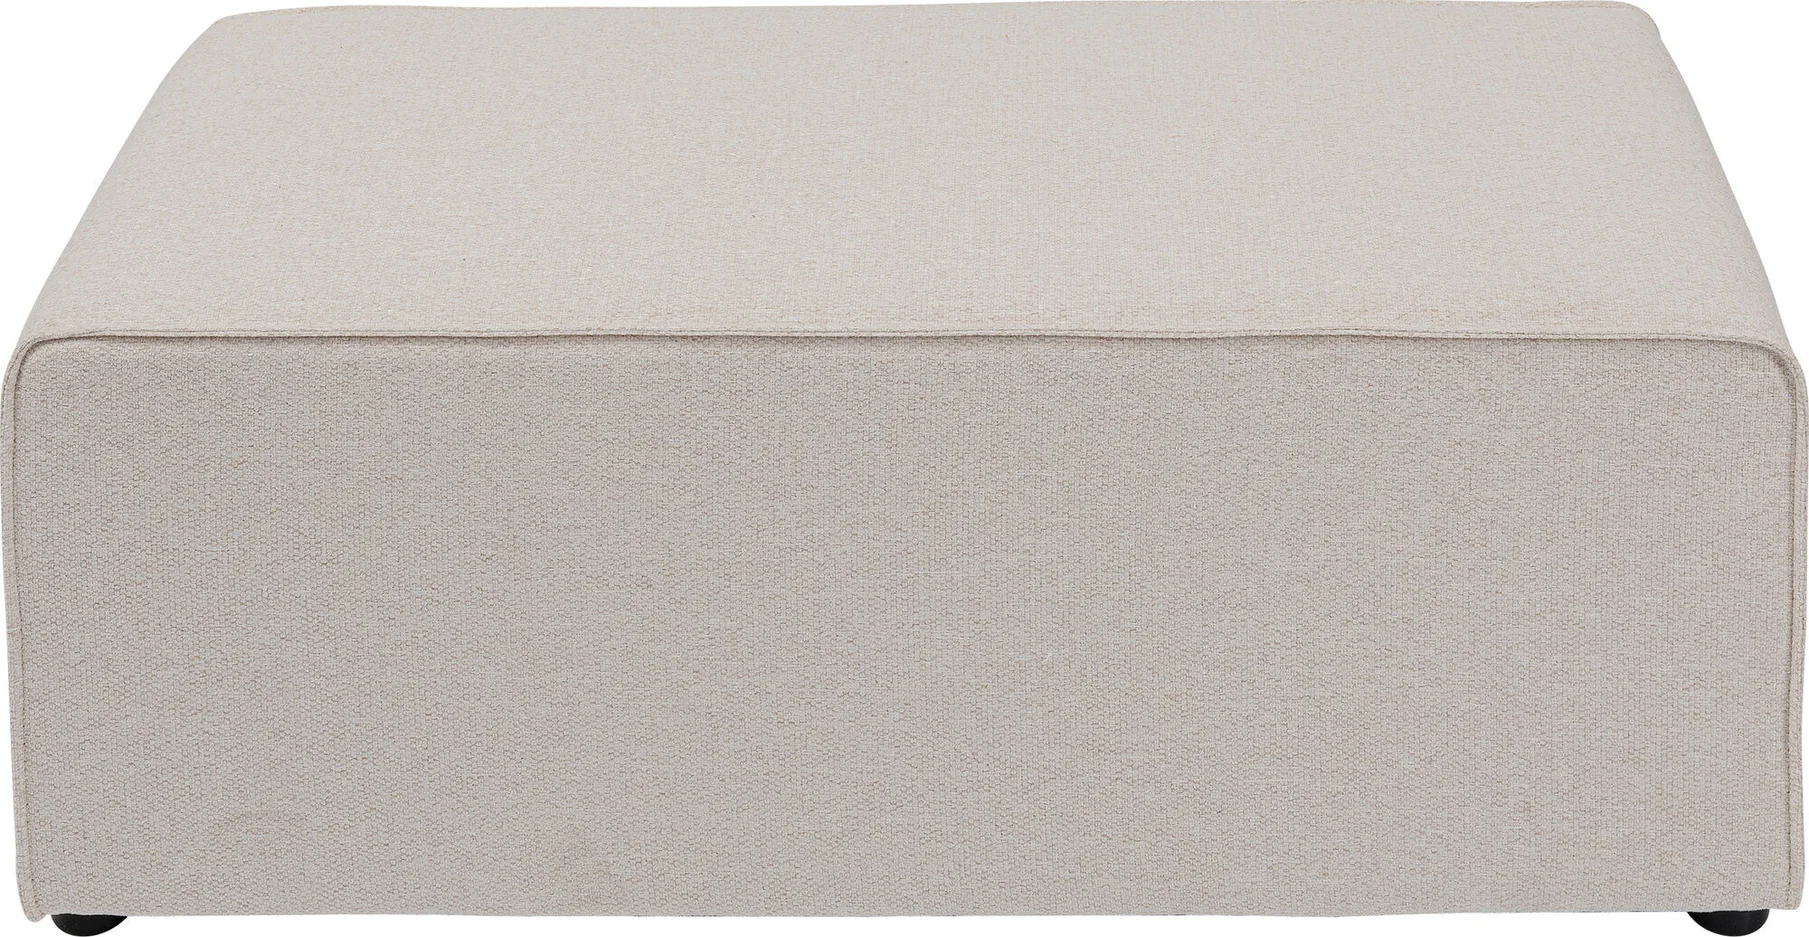 6: KARE DESIGN Infinity Pouff Elements Cream modul - creme polyester og polypropylen (50x100)